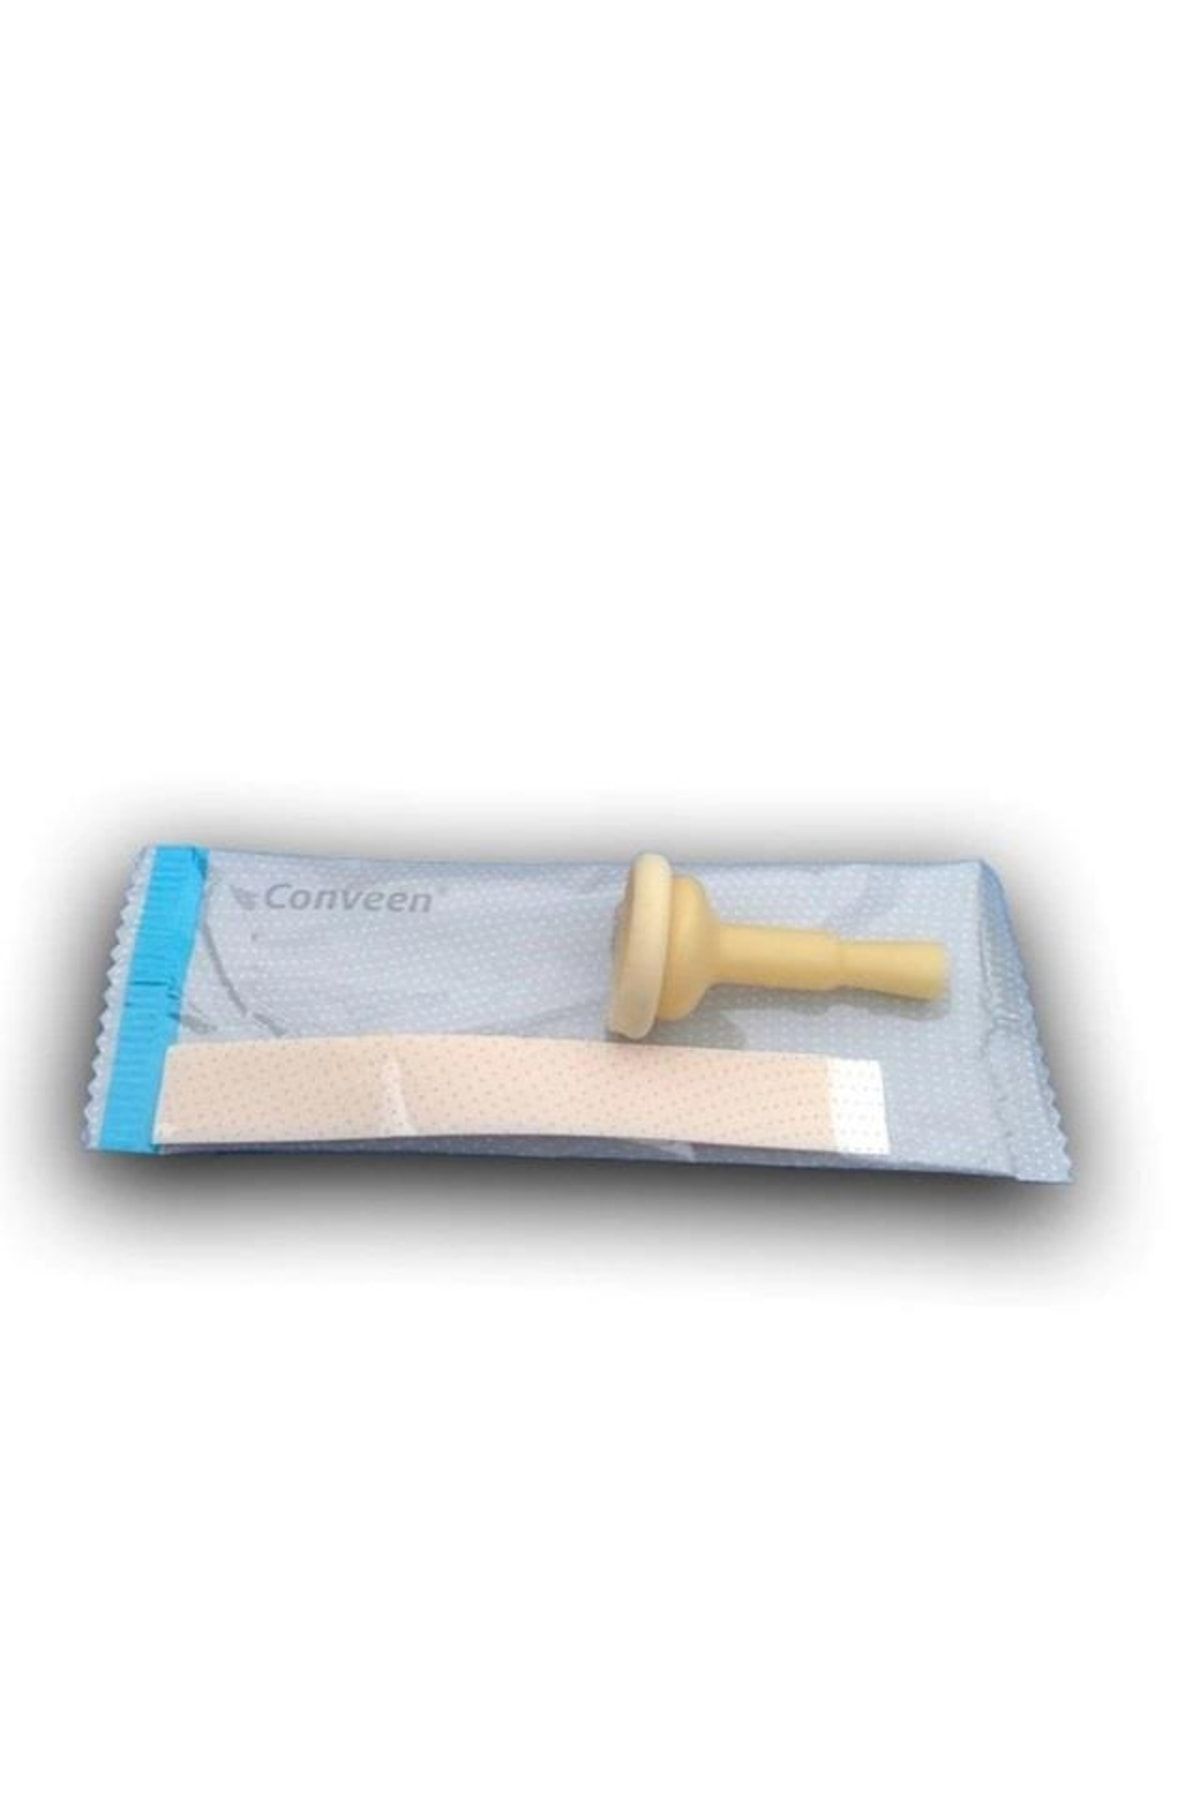 Coloplast Conveen Prezervatif Sonda Yapışkan Şeritli 30 Adet